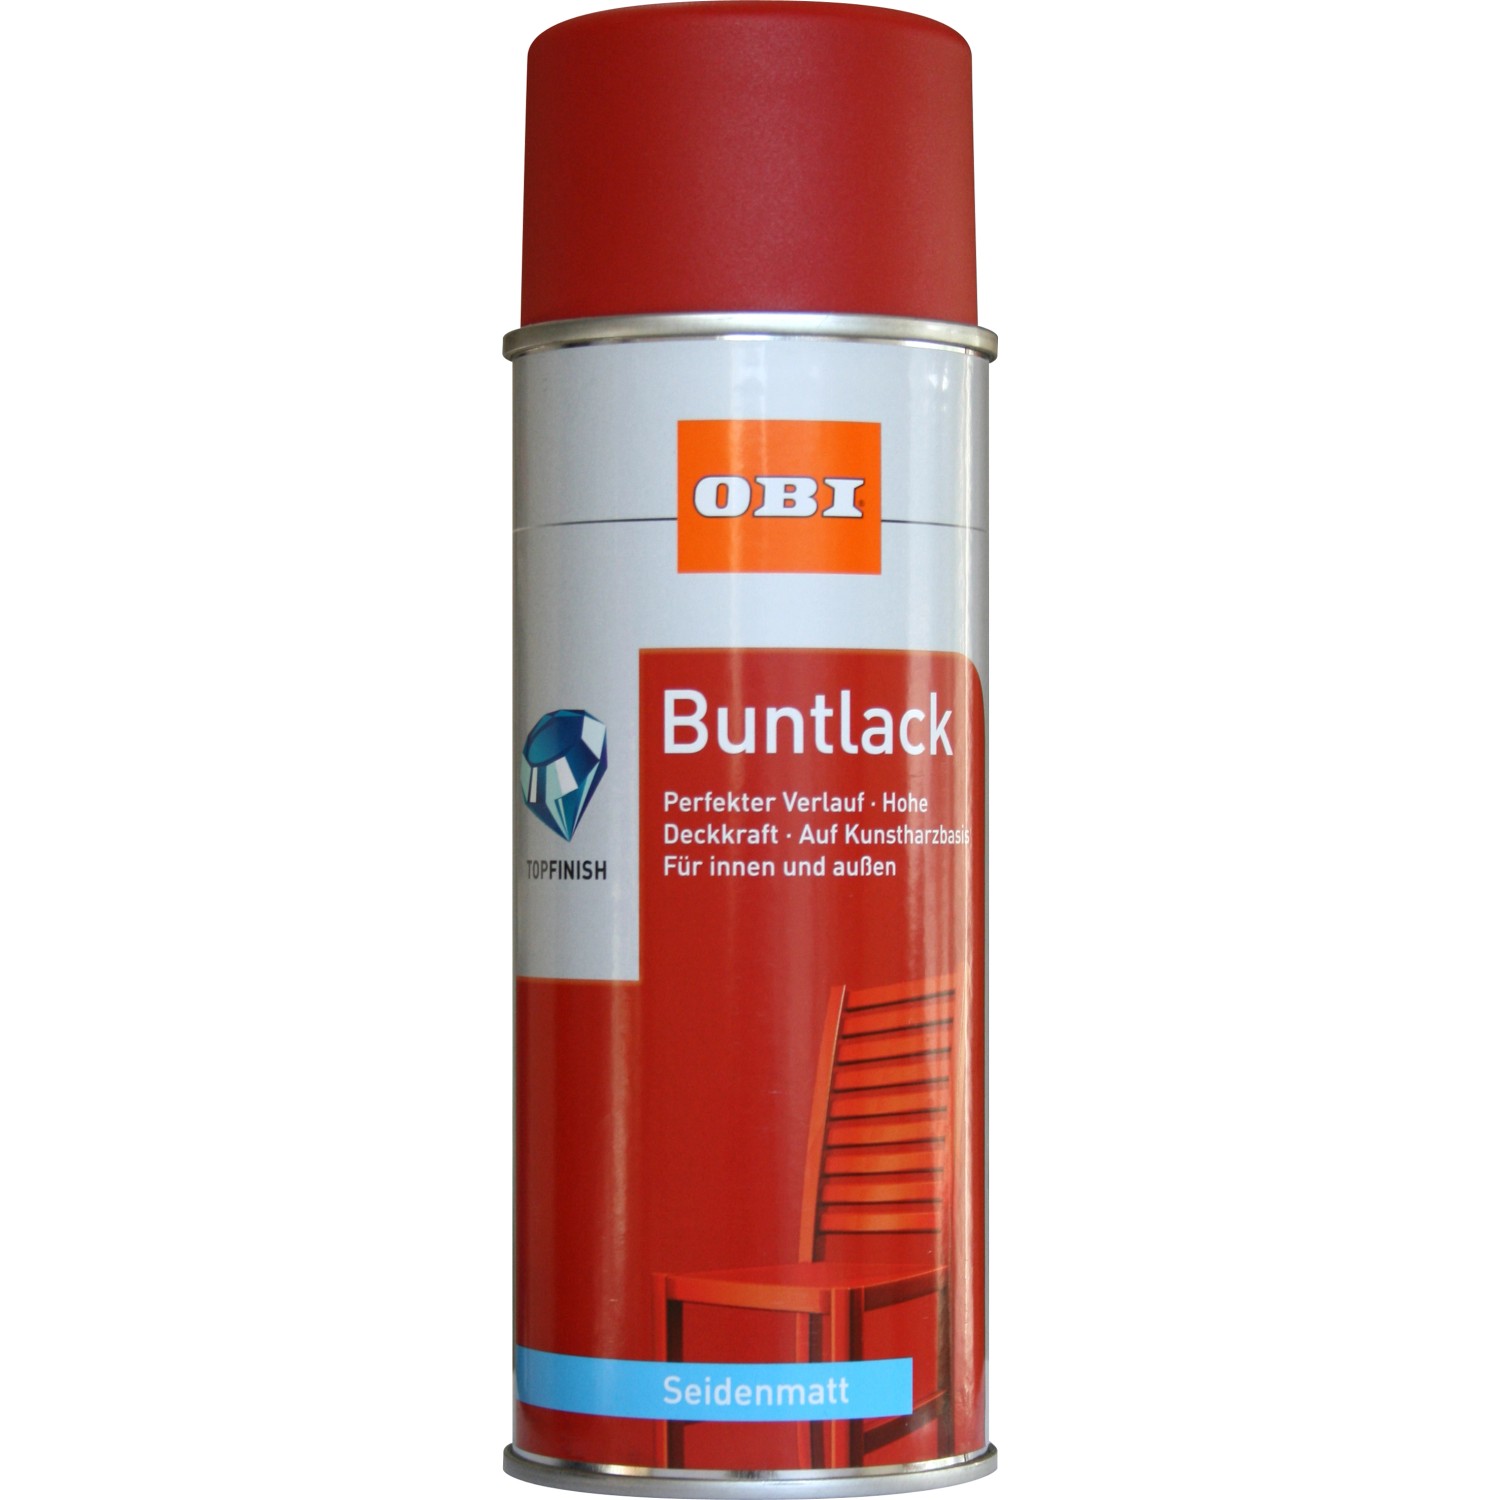 OBI Buntlack Spray RAL 3000 Feuerrot seidenmatt 400 ml von OBI